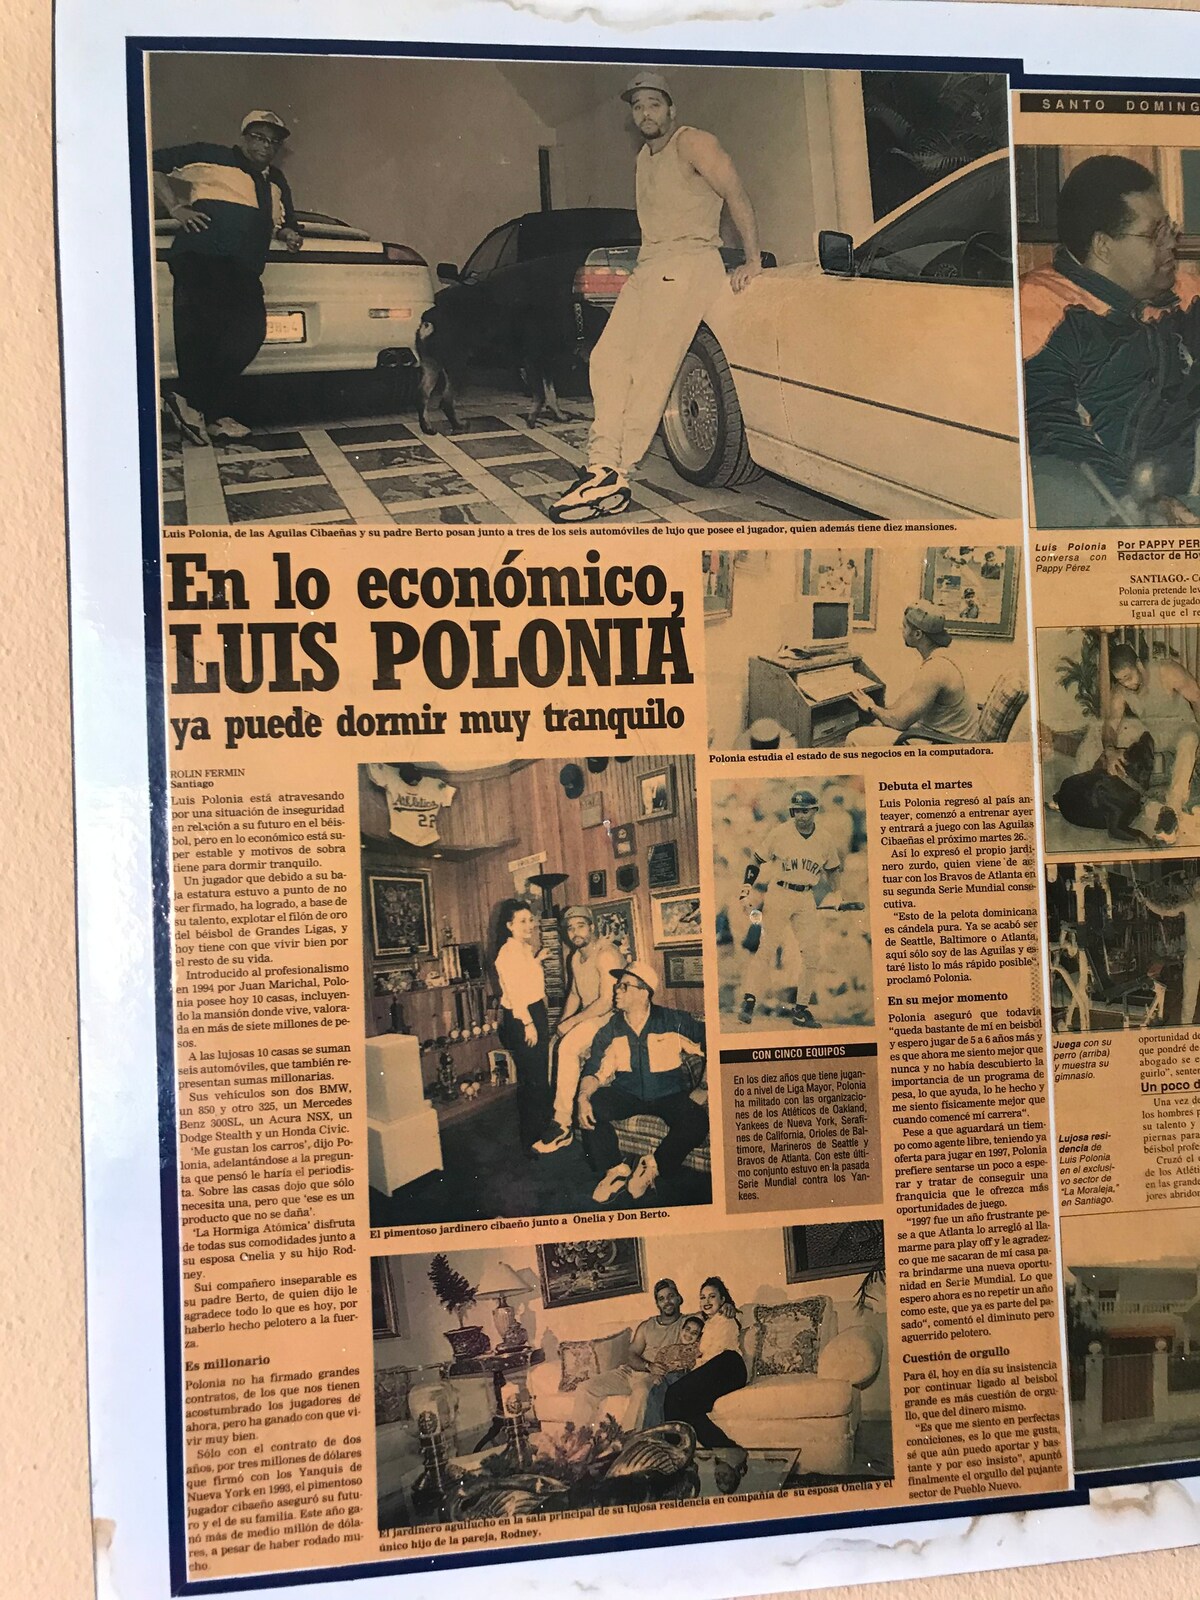 Luis Polonia多米尼加共和国棒球别墅